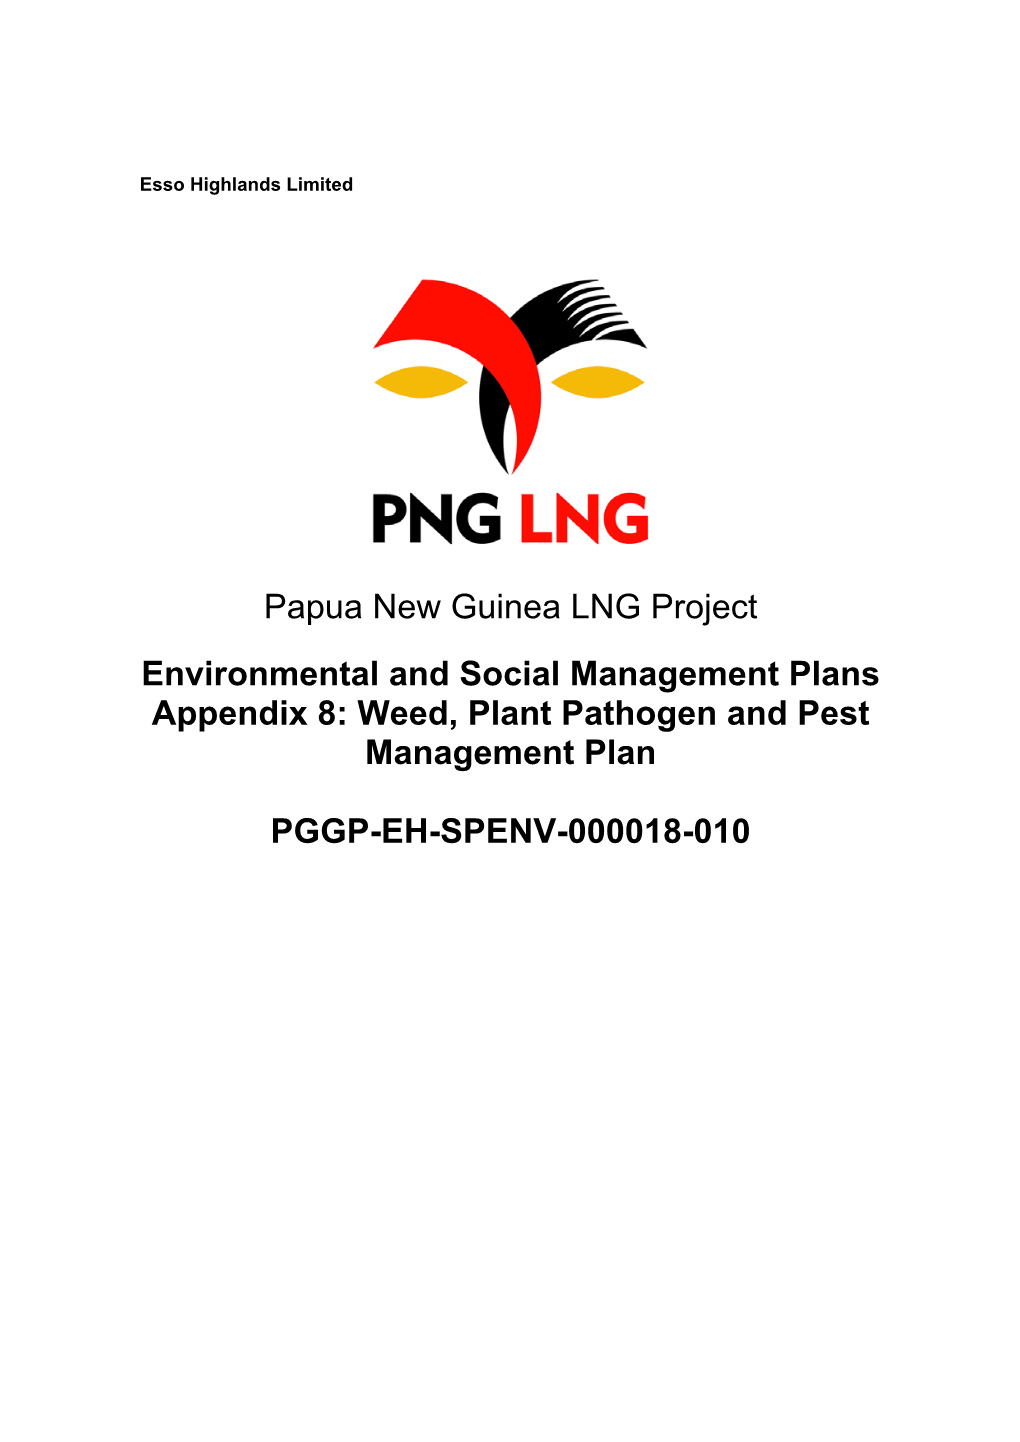 Weed, Plant Pathogen and Pest Management Plan